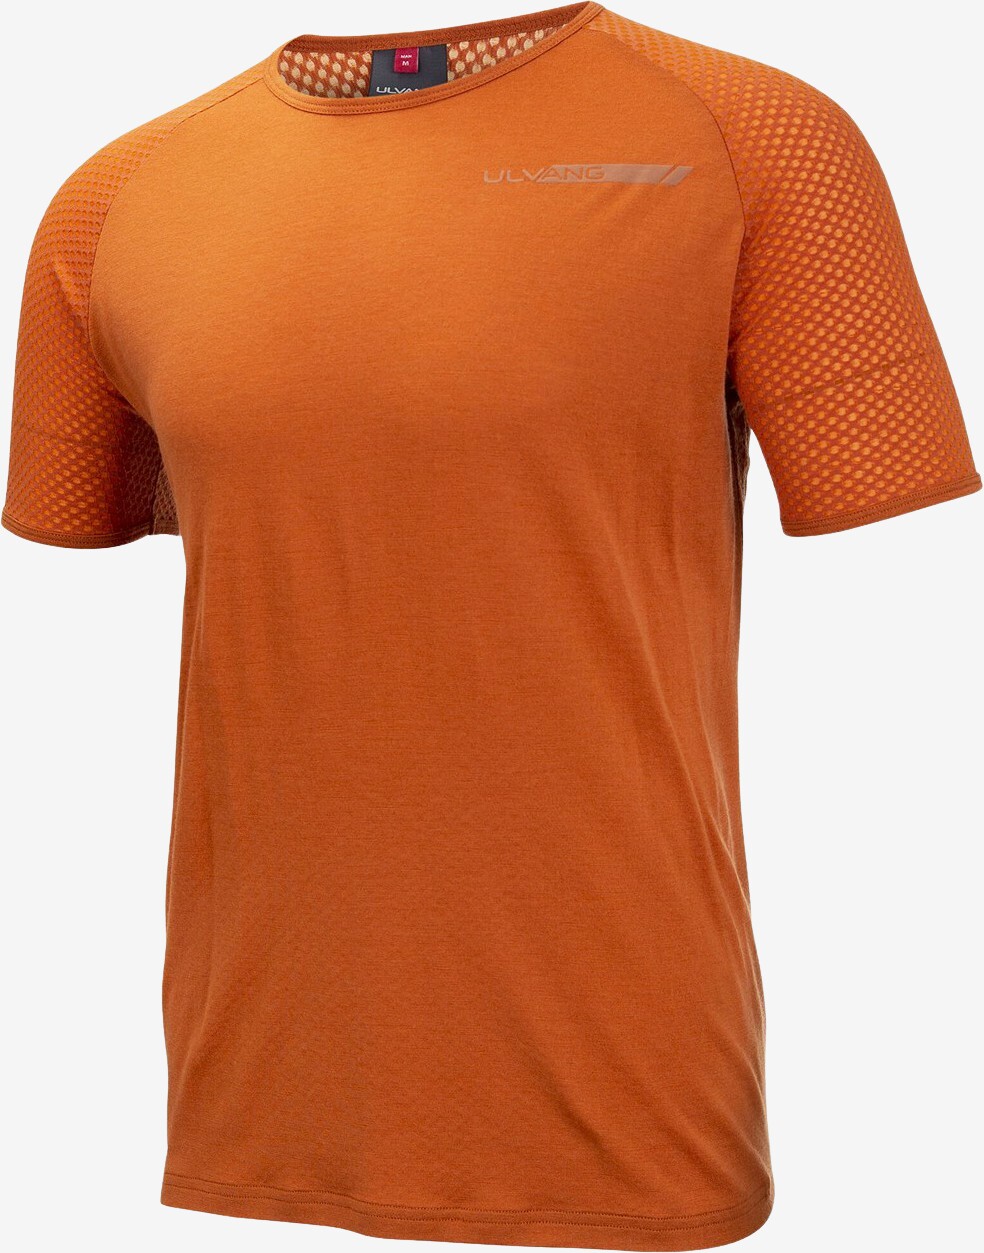 Ulvang - Pace t-shirt (Orange) - S